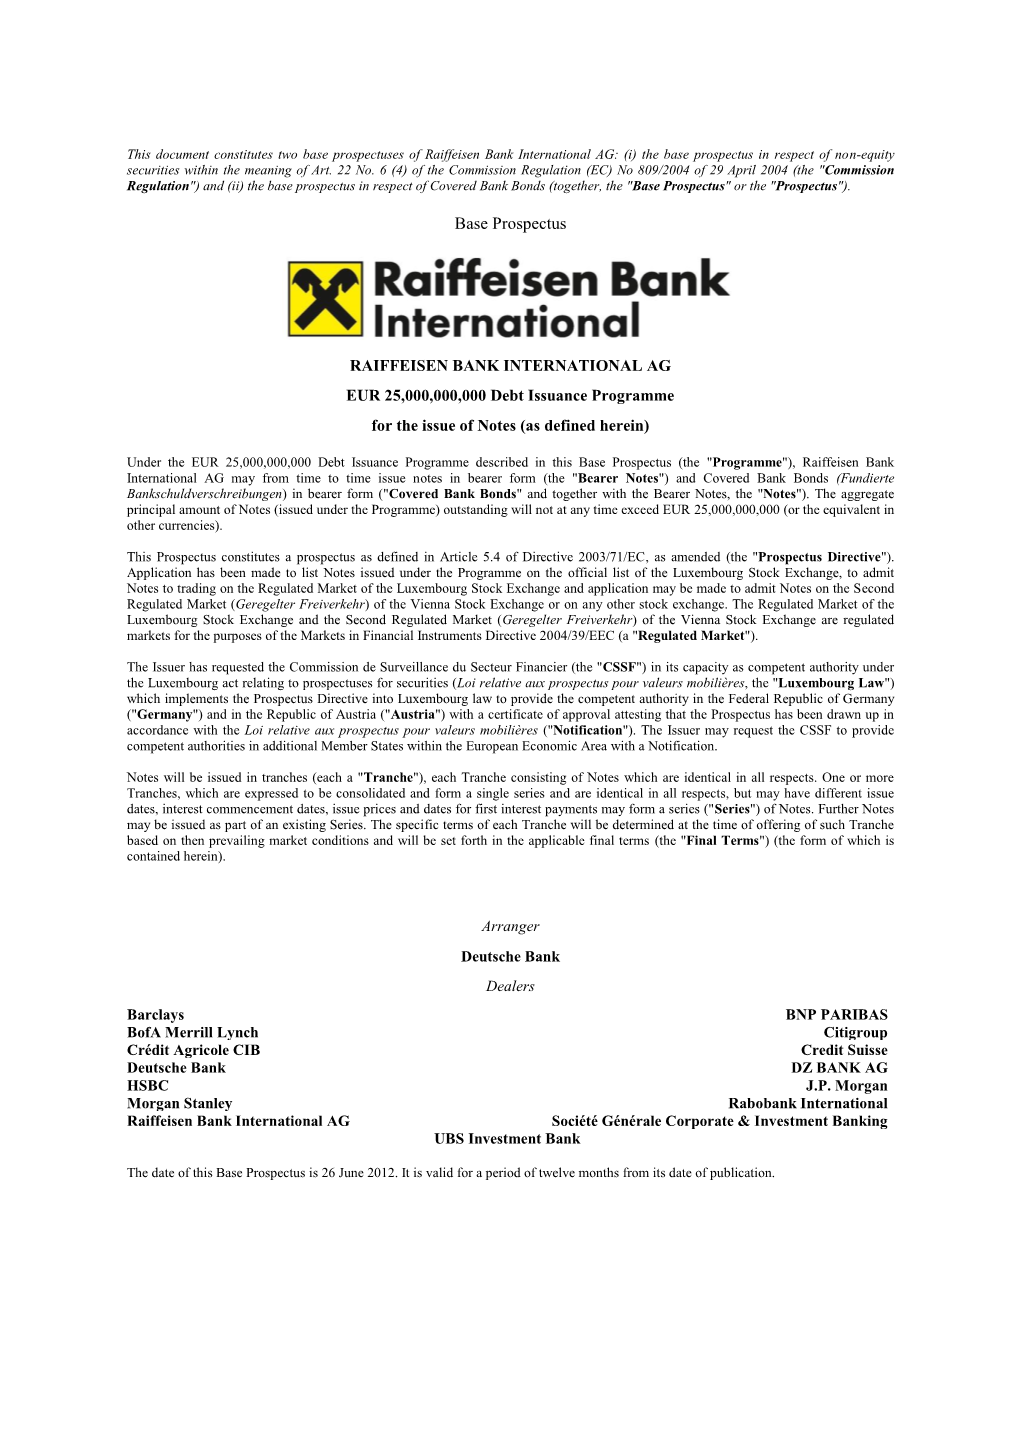 Base Prospectus RAIFFEISEN BANK INTERNATIONAL AG EUR